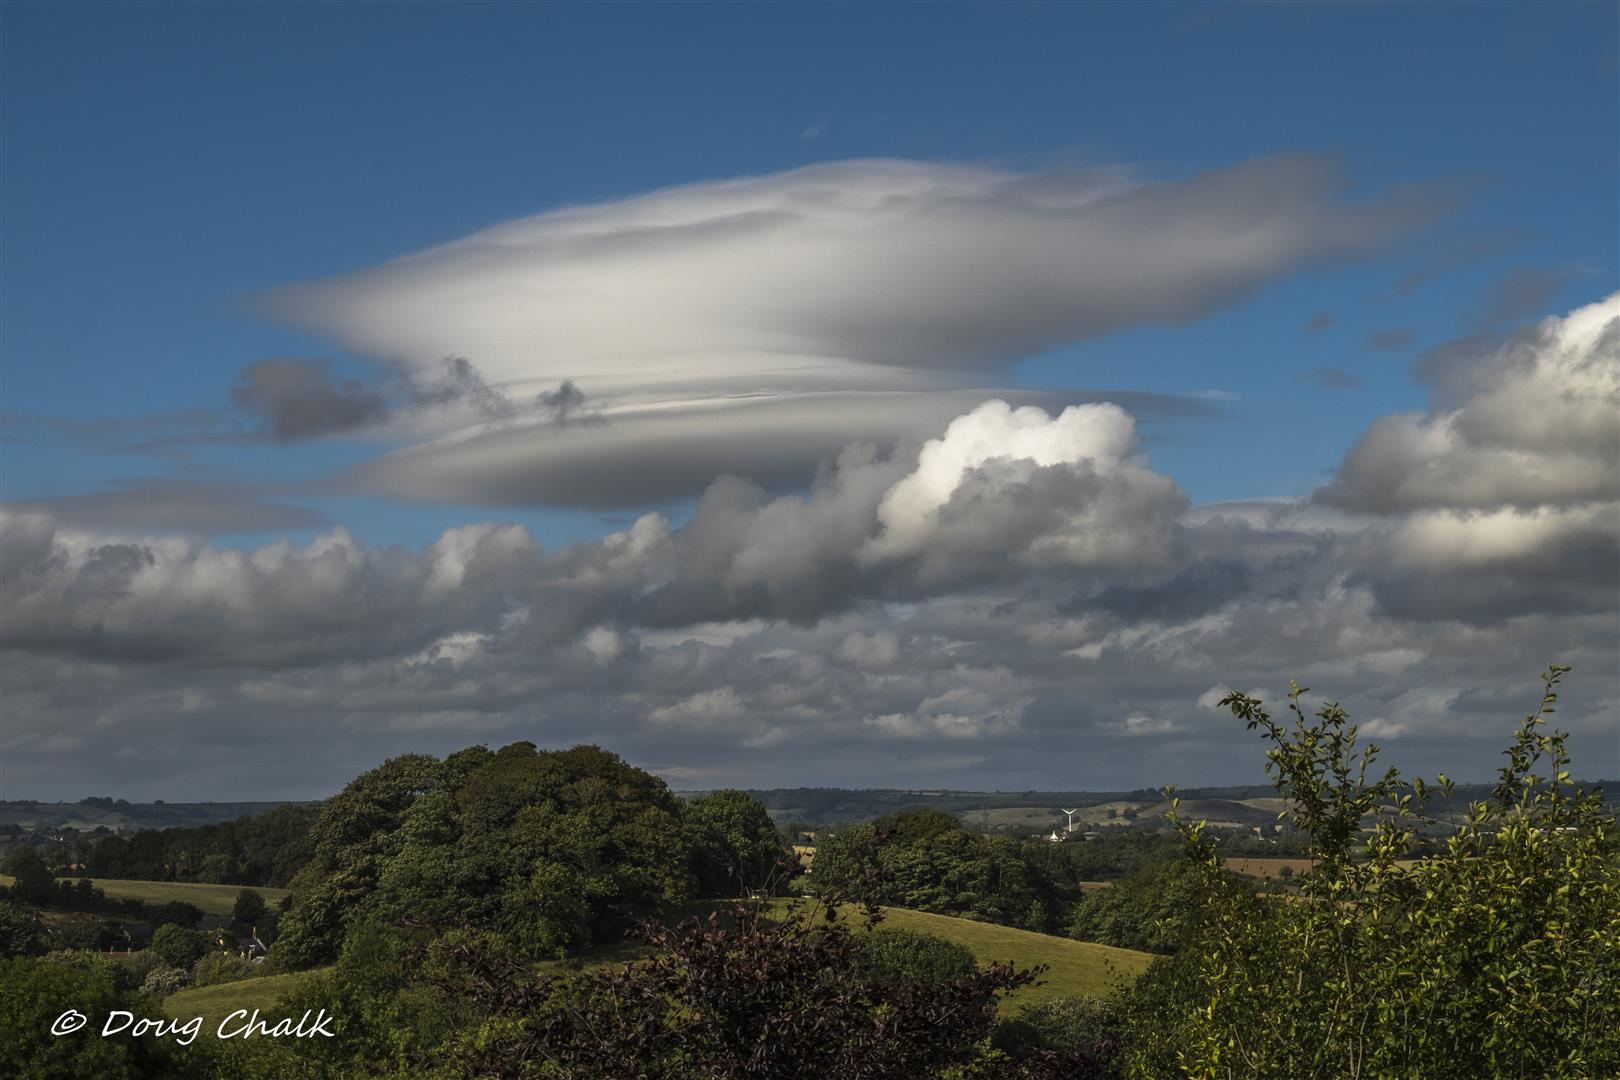 1st Place Lenticular cloud over Symondsbury Dorset by Doug Chalk @doug_chalk